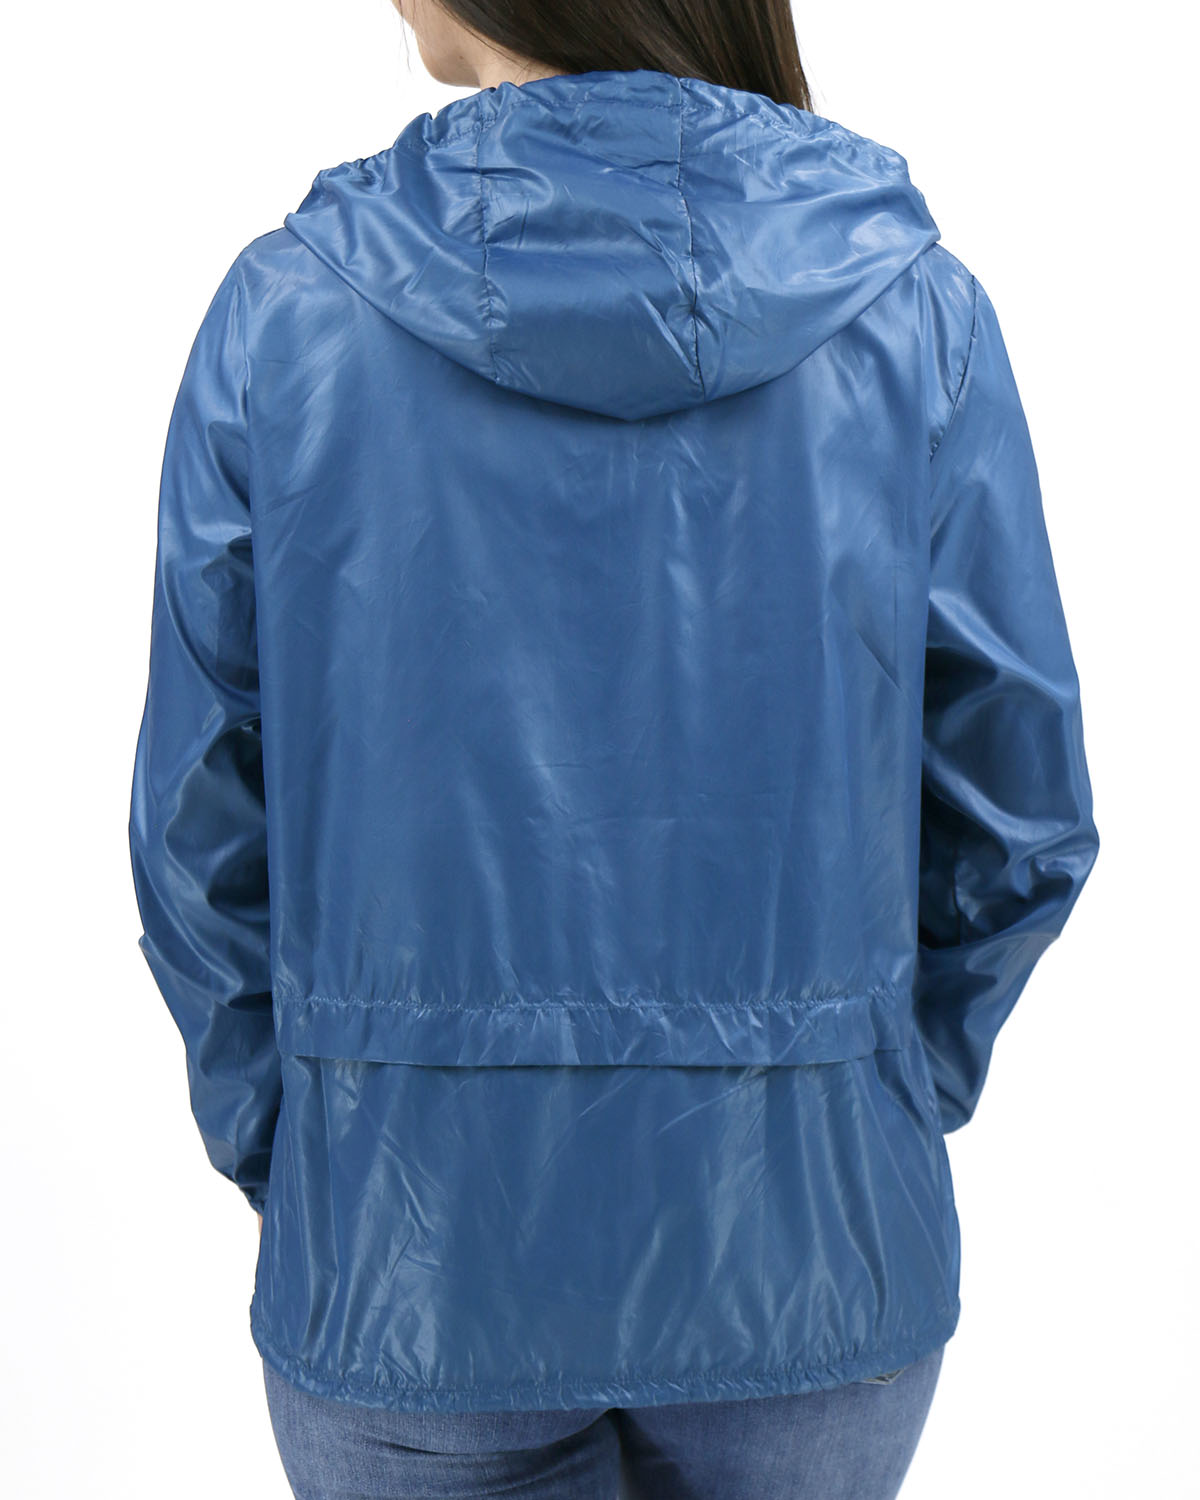 Packable Rain Jacket in Lagoon - FINAL SALE